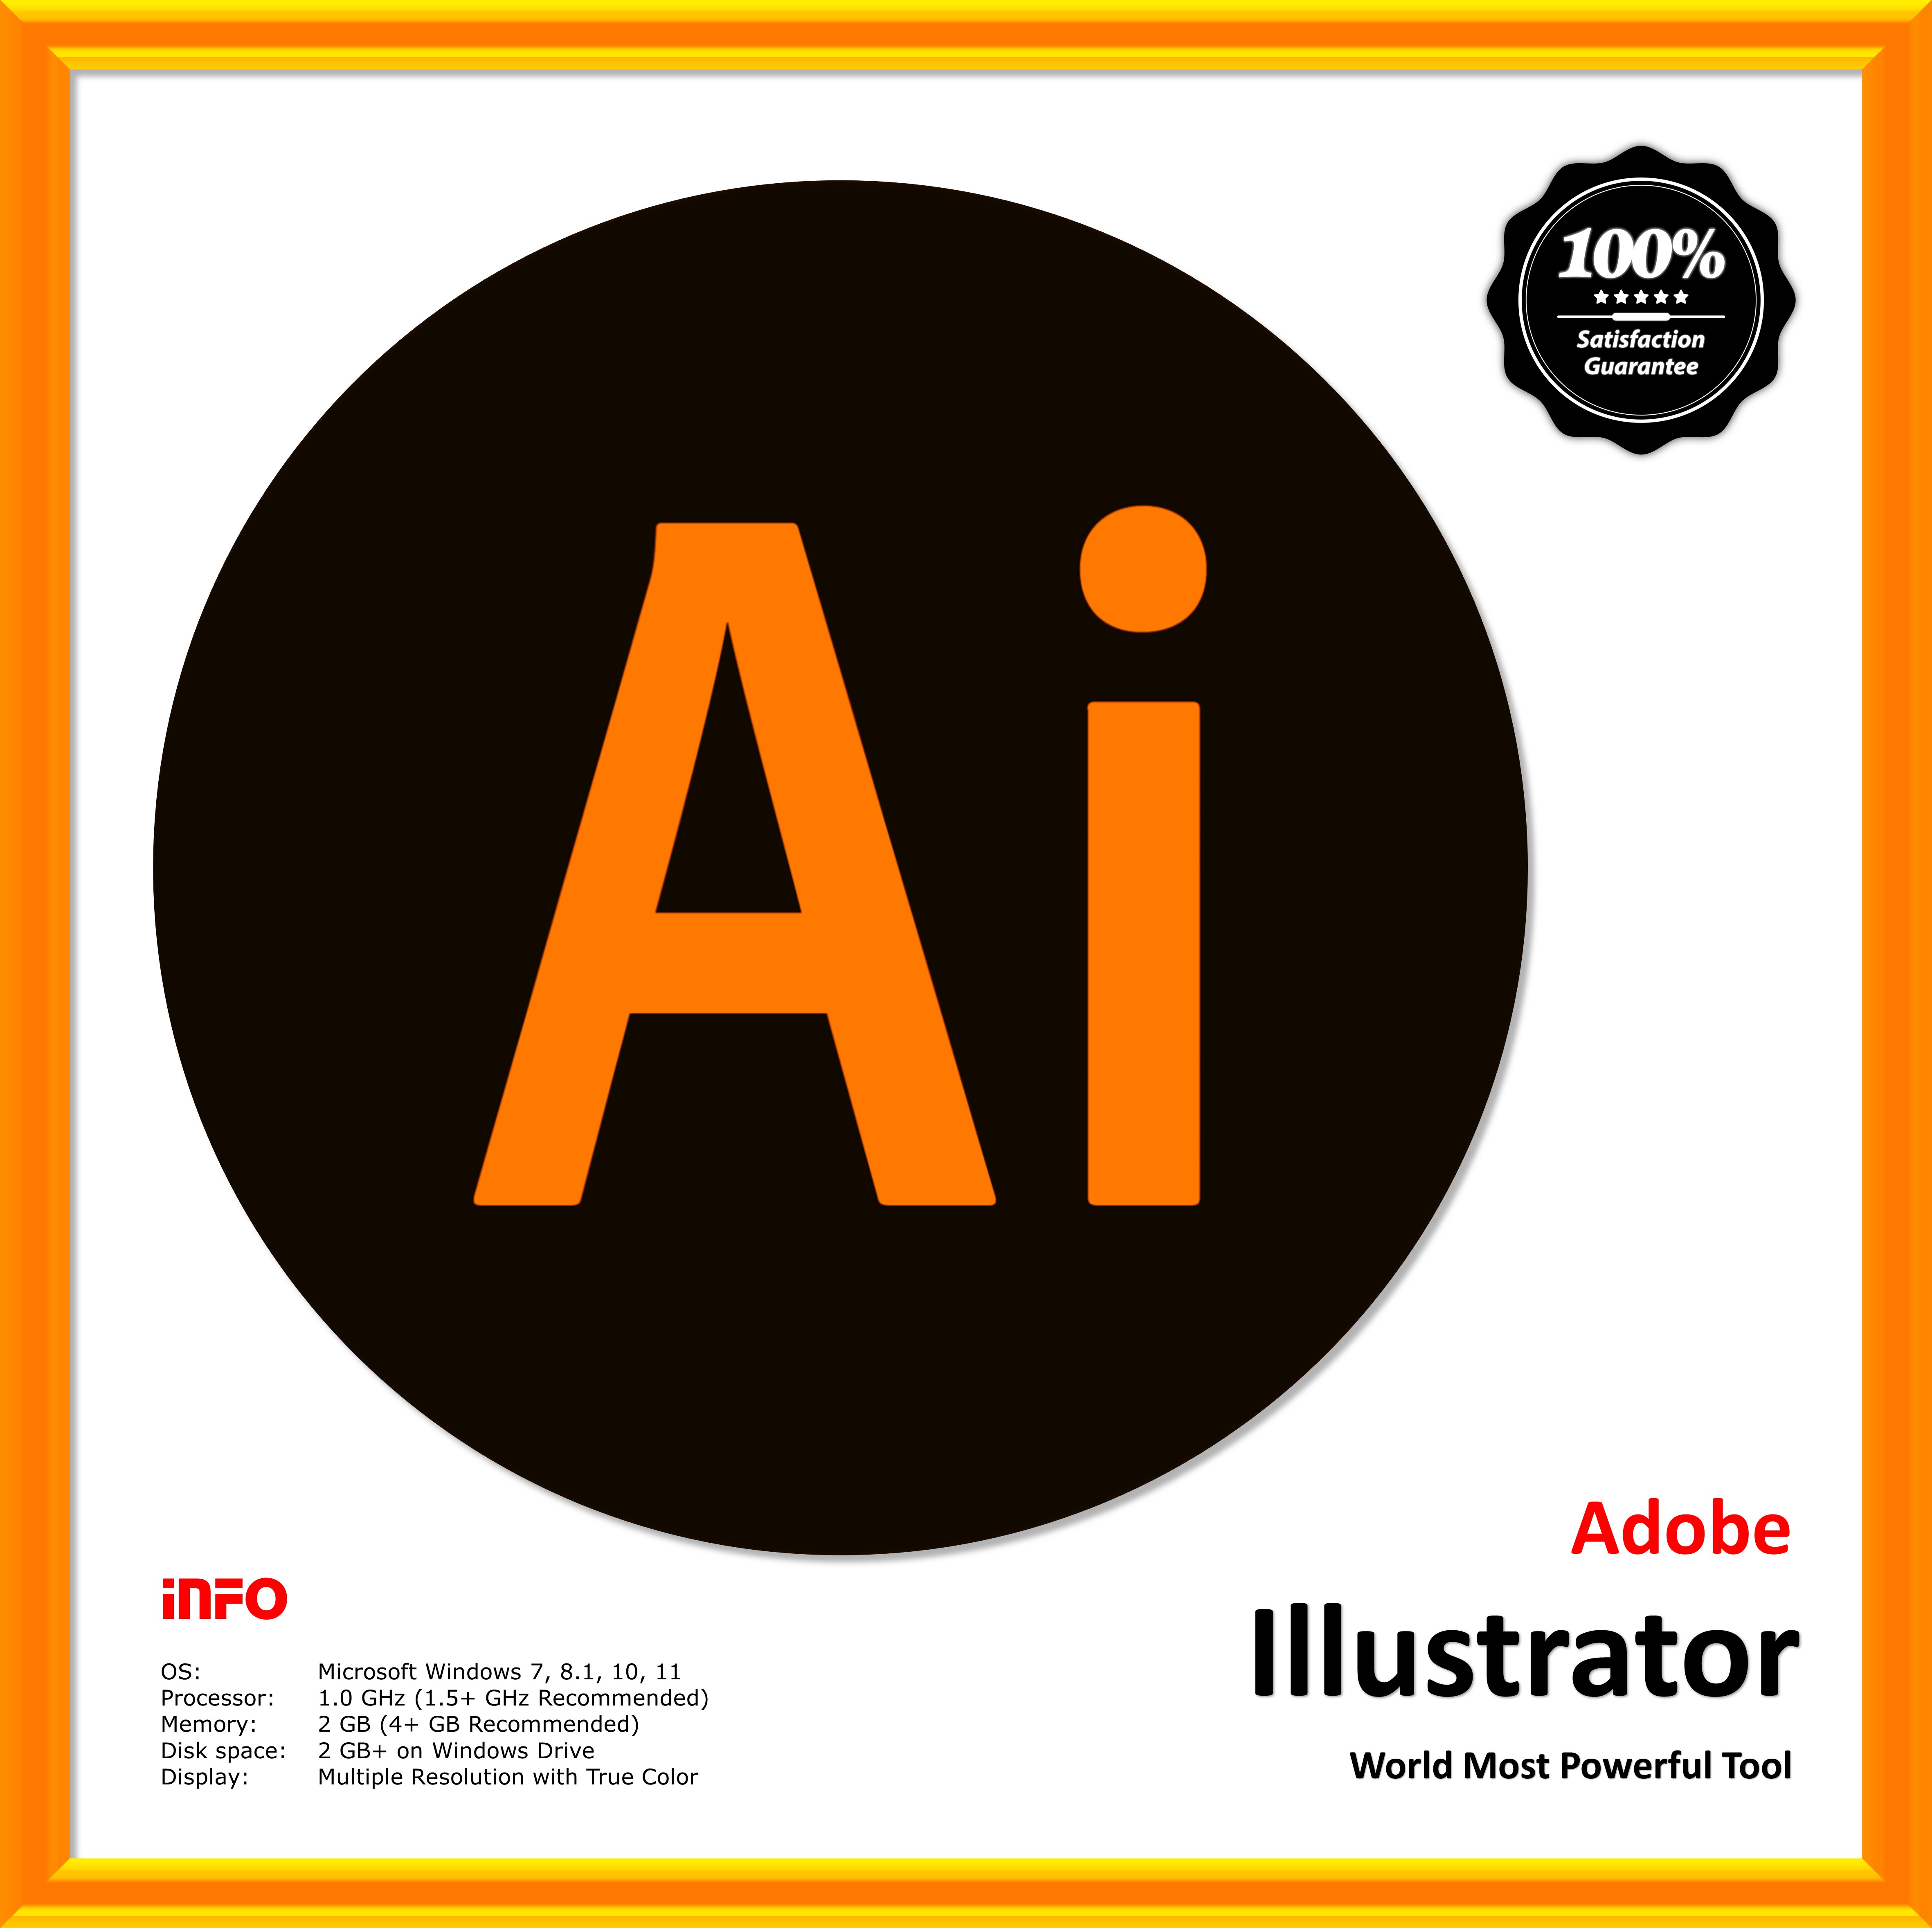 adobe illustrator web image resolution